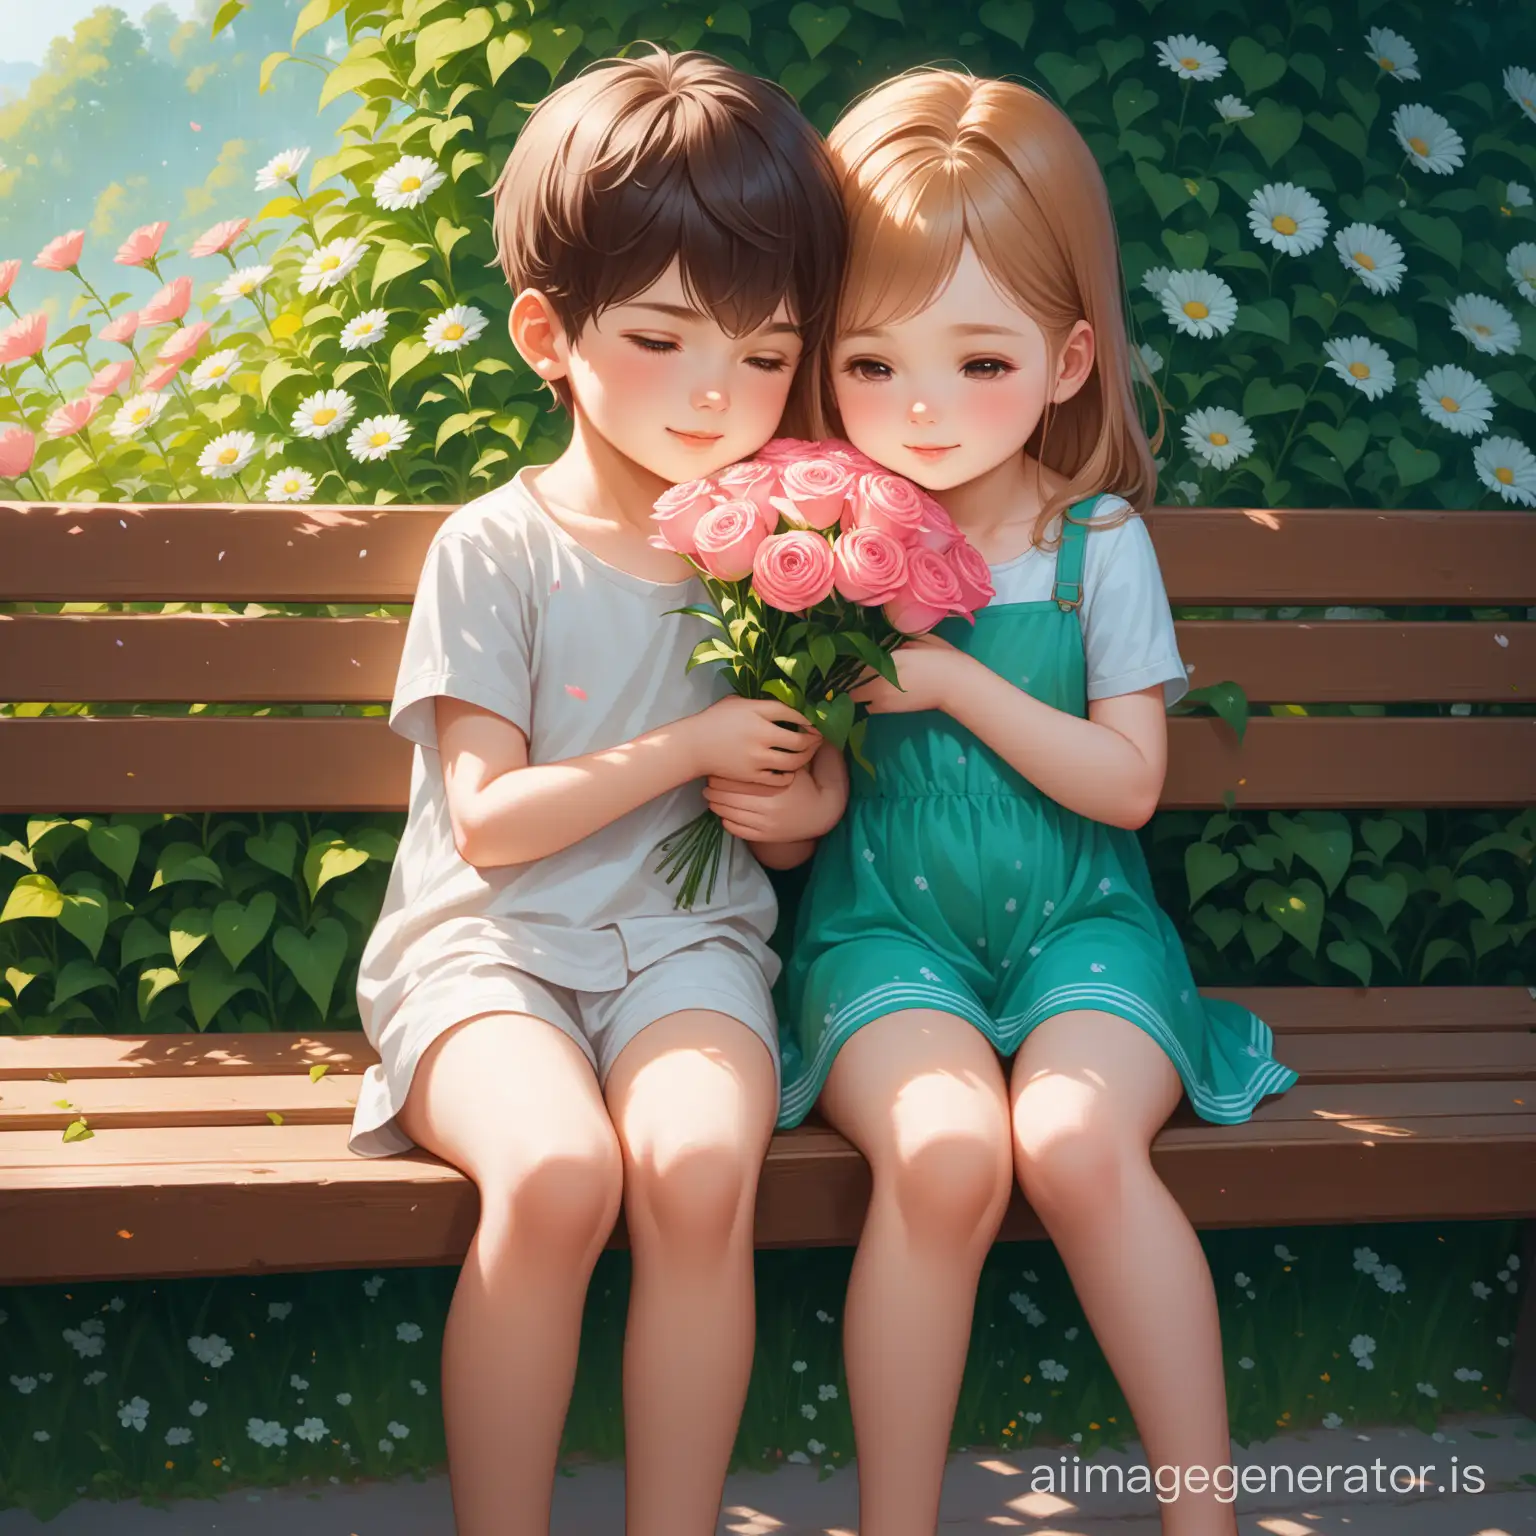 Adorable-Children-Embracing-on-Bench-with-Flowers-Awardwinning-CG-Art